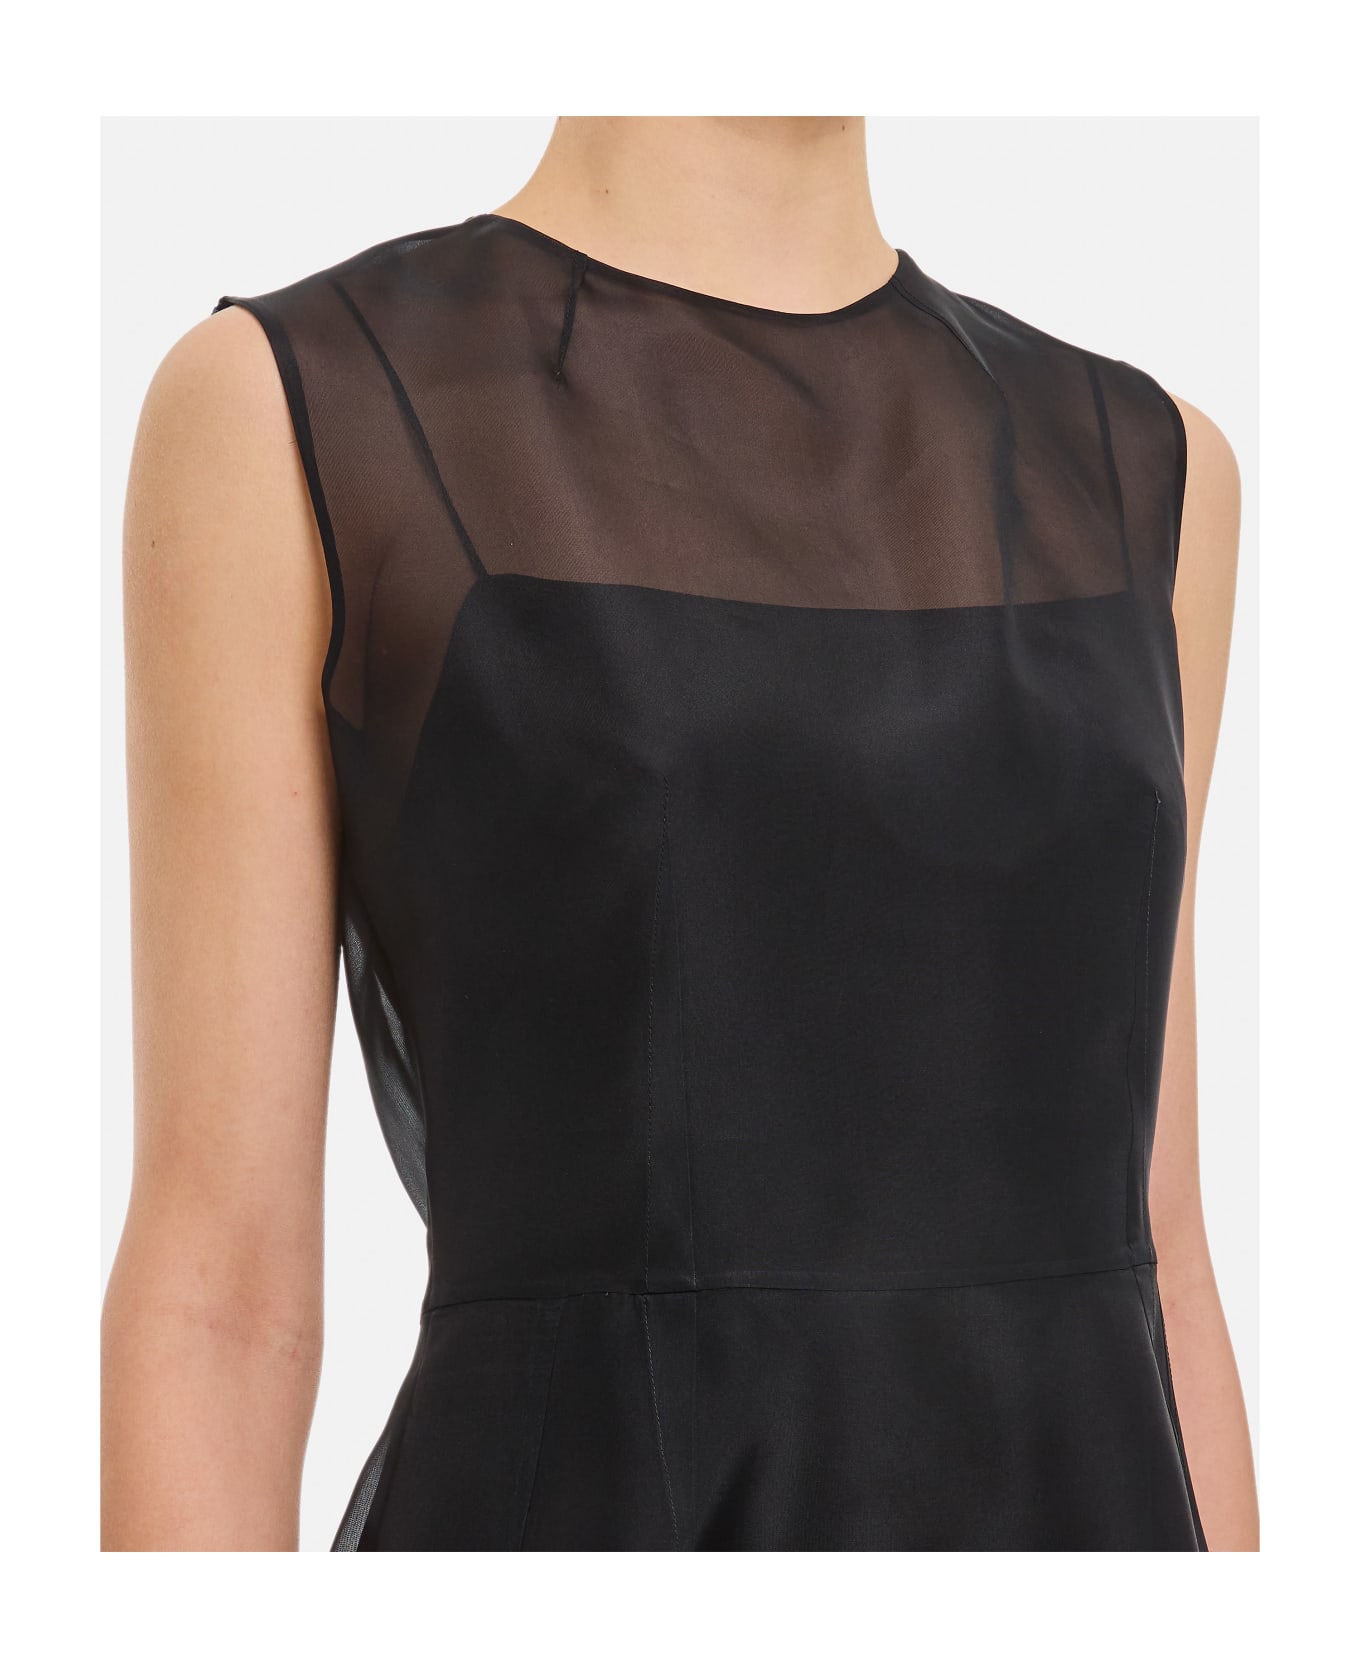 Gabriela Hearst Maslow Dress - Black